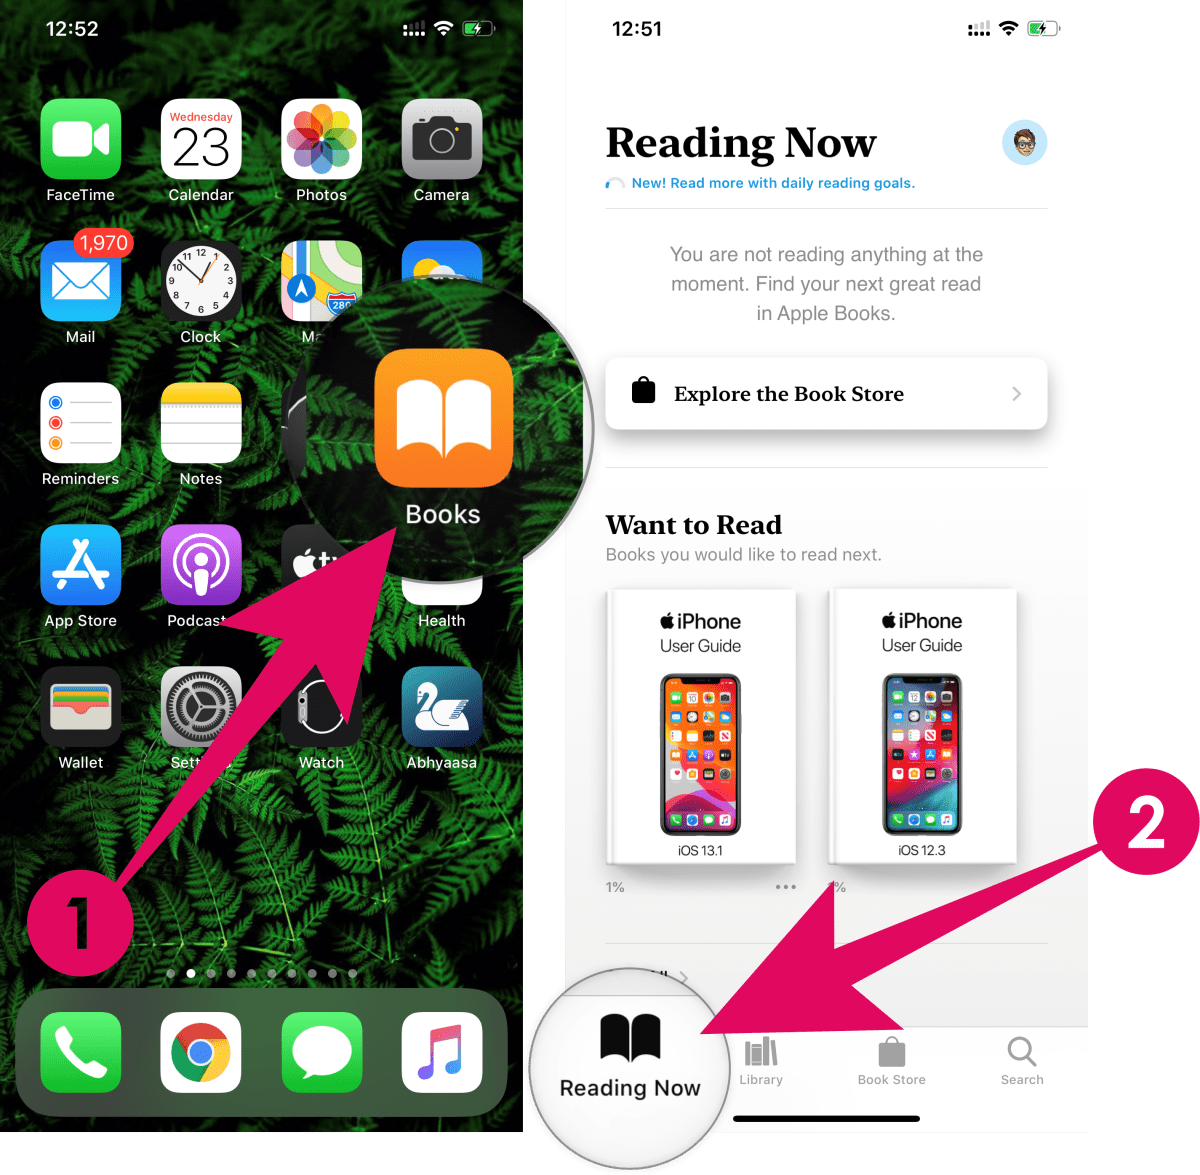 Open Apple Books app "Reading Now" tab